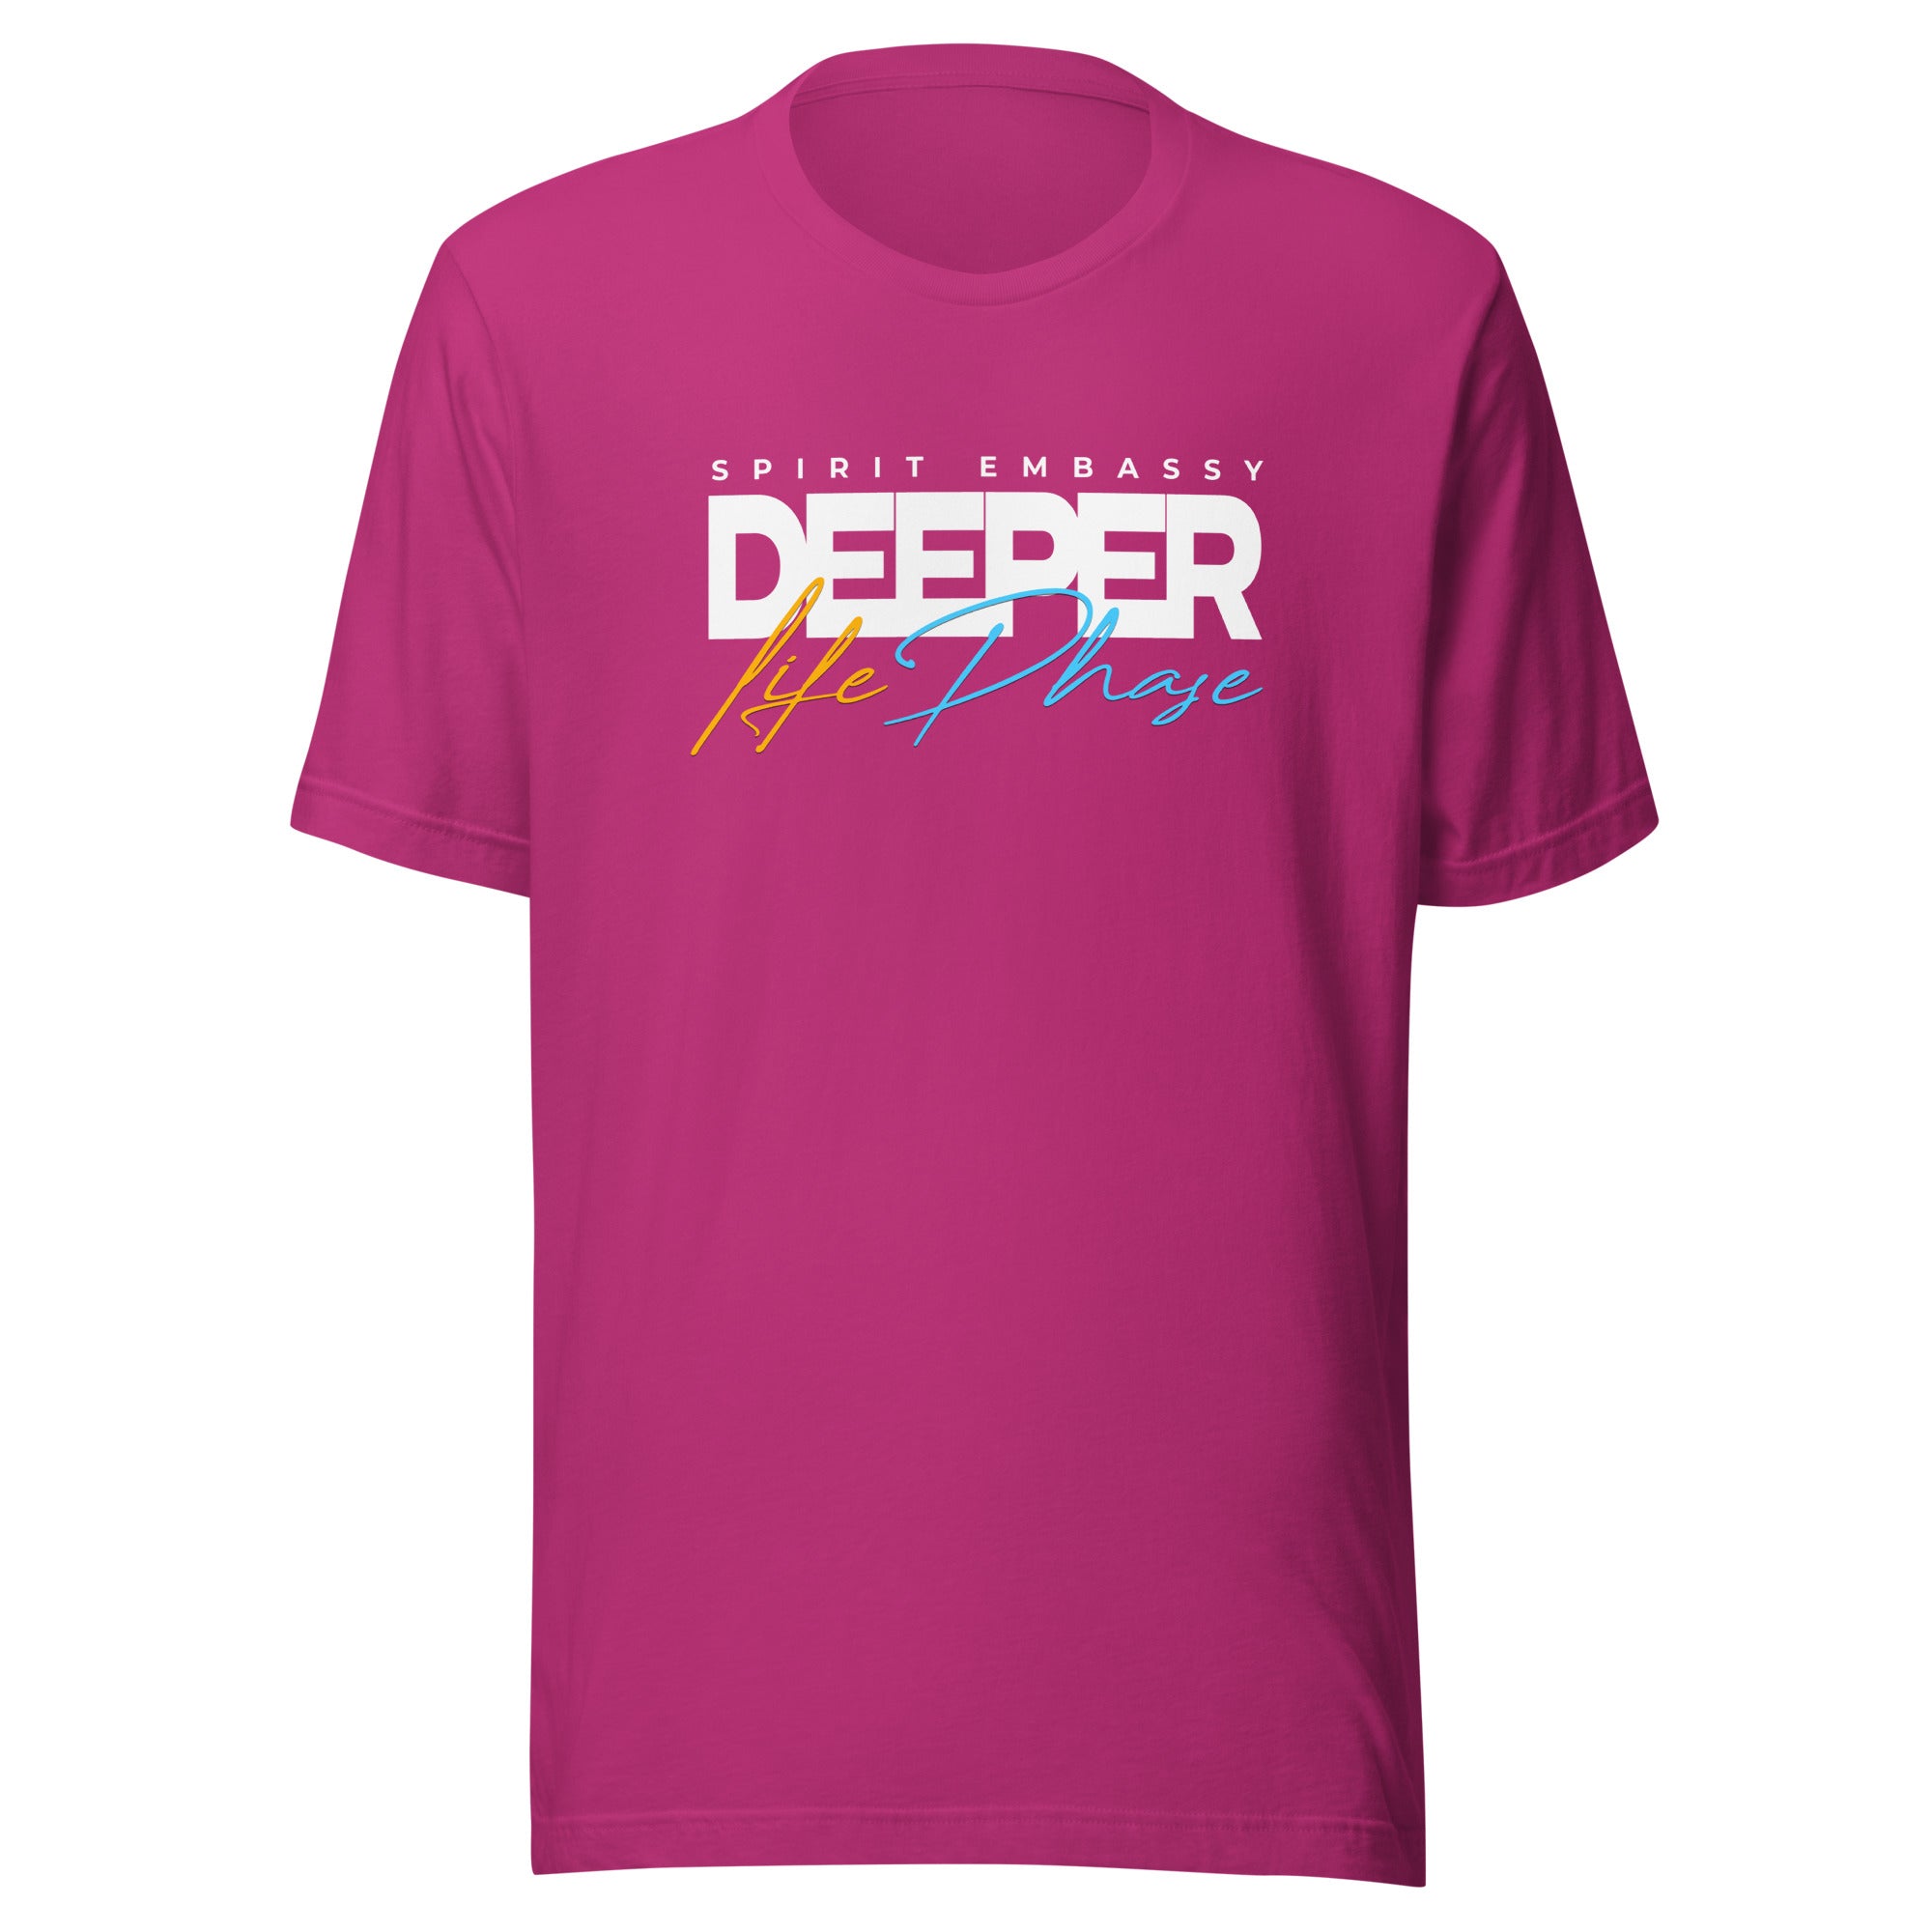 Deeper Life Phase T-shirt